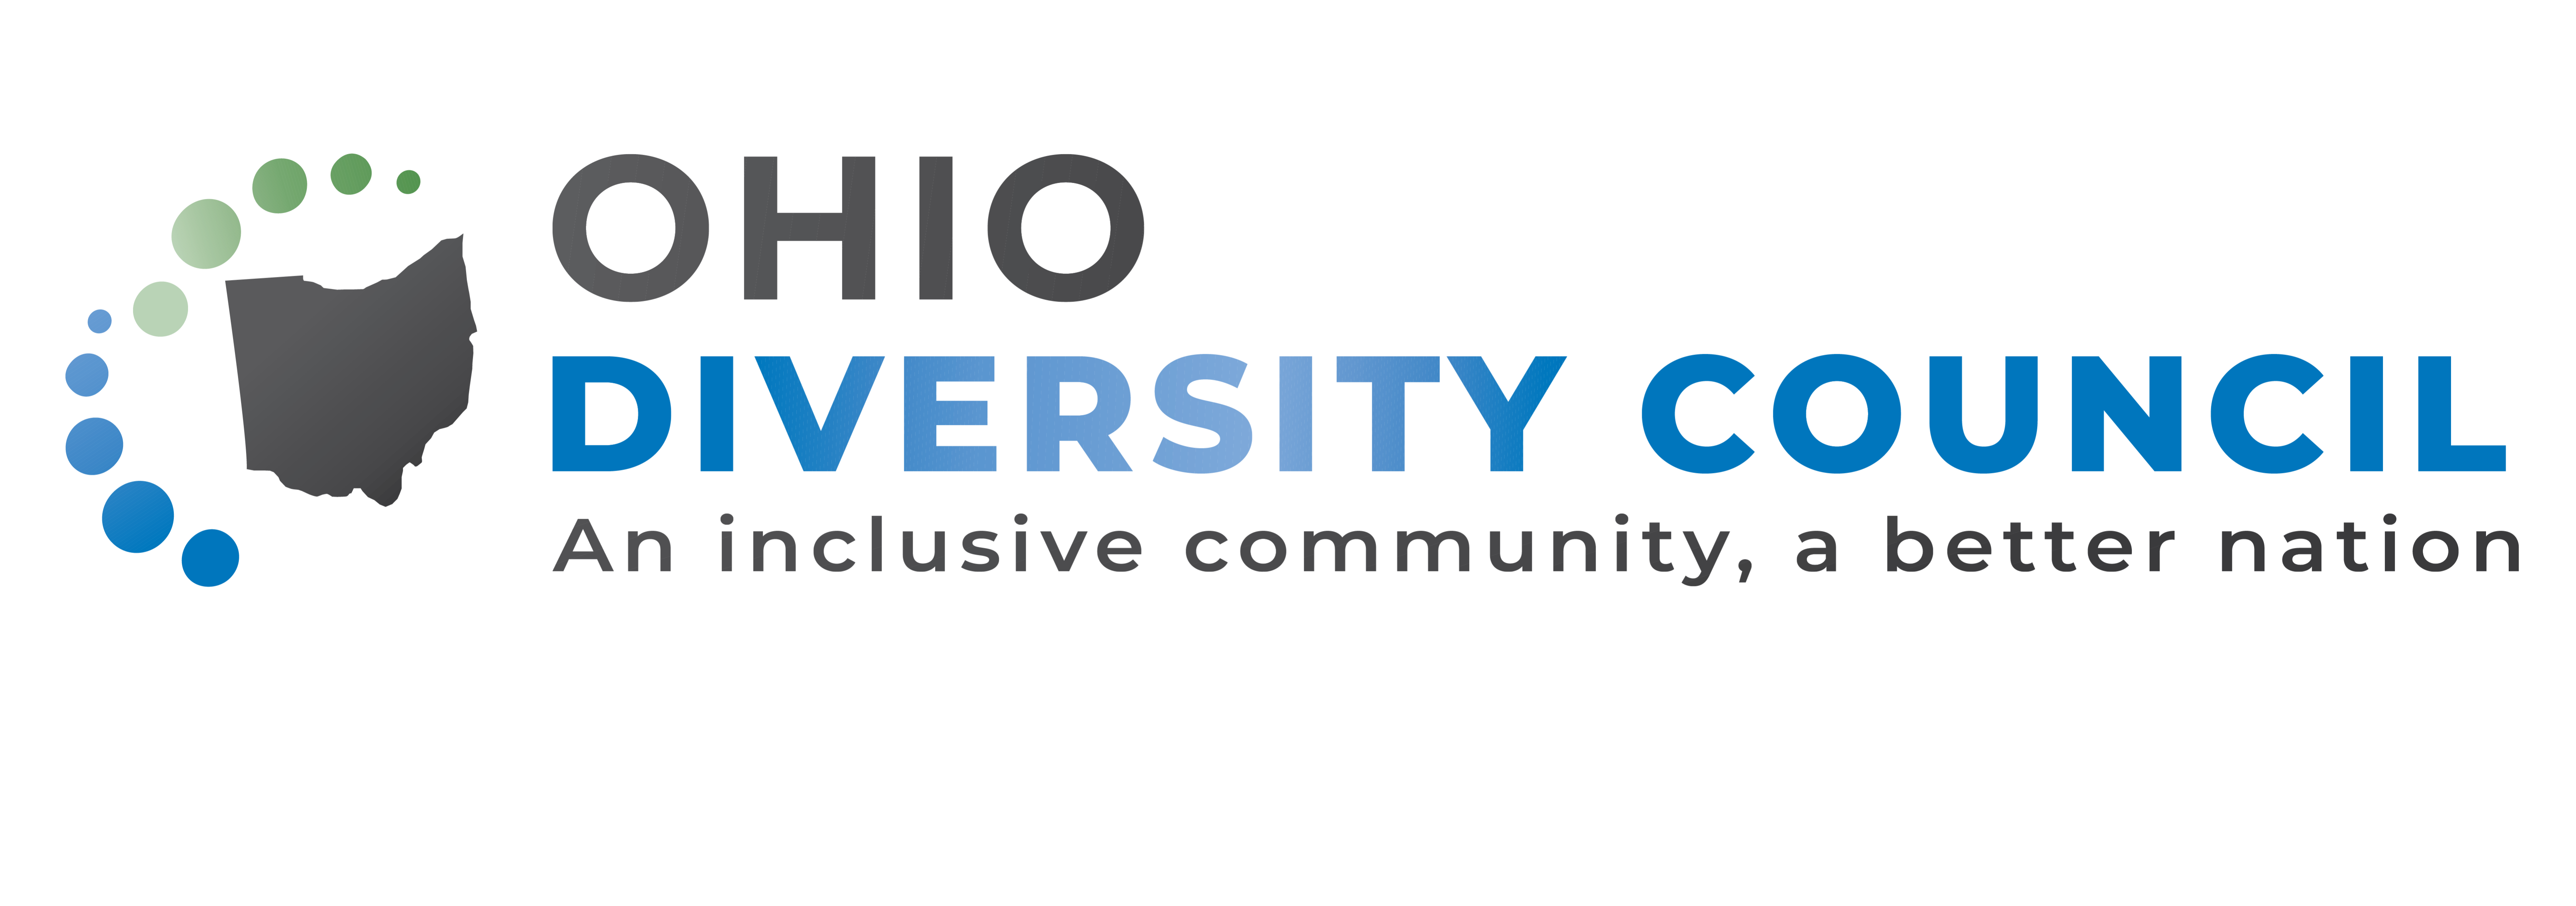 Ohio Diversity Council an inclusive community, a better nation